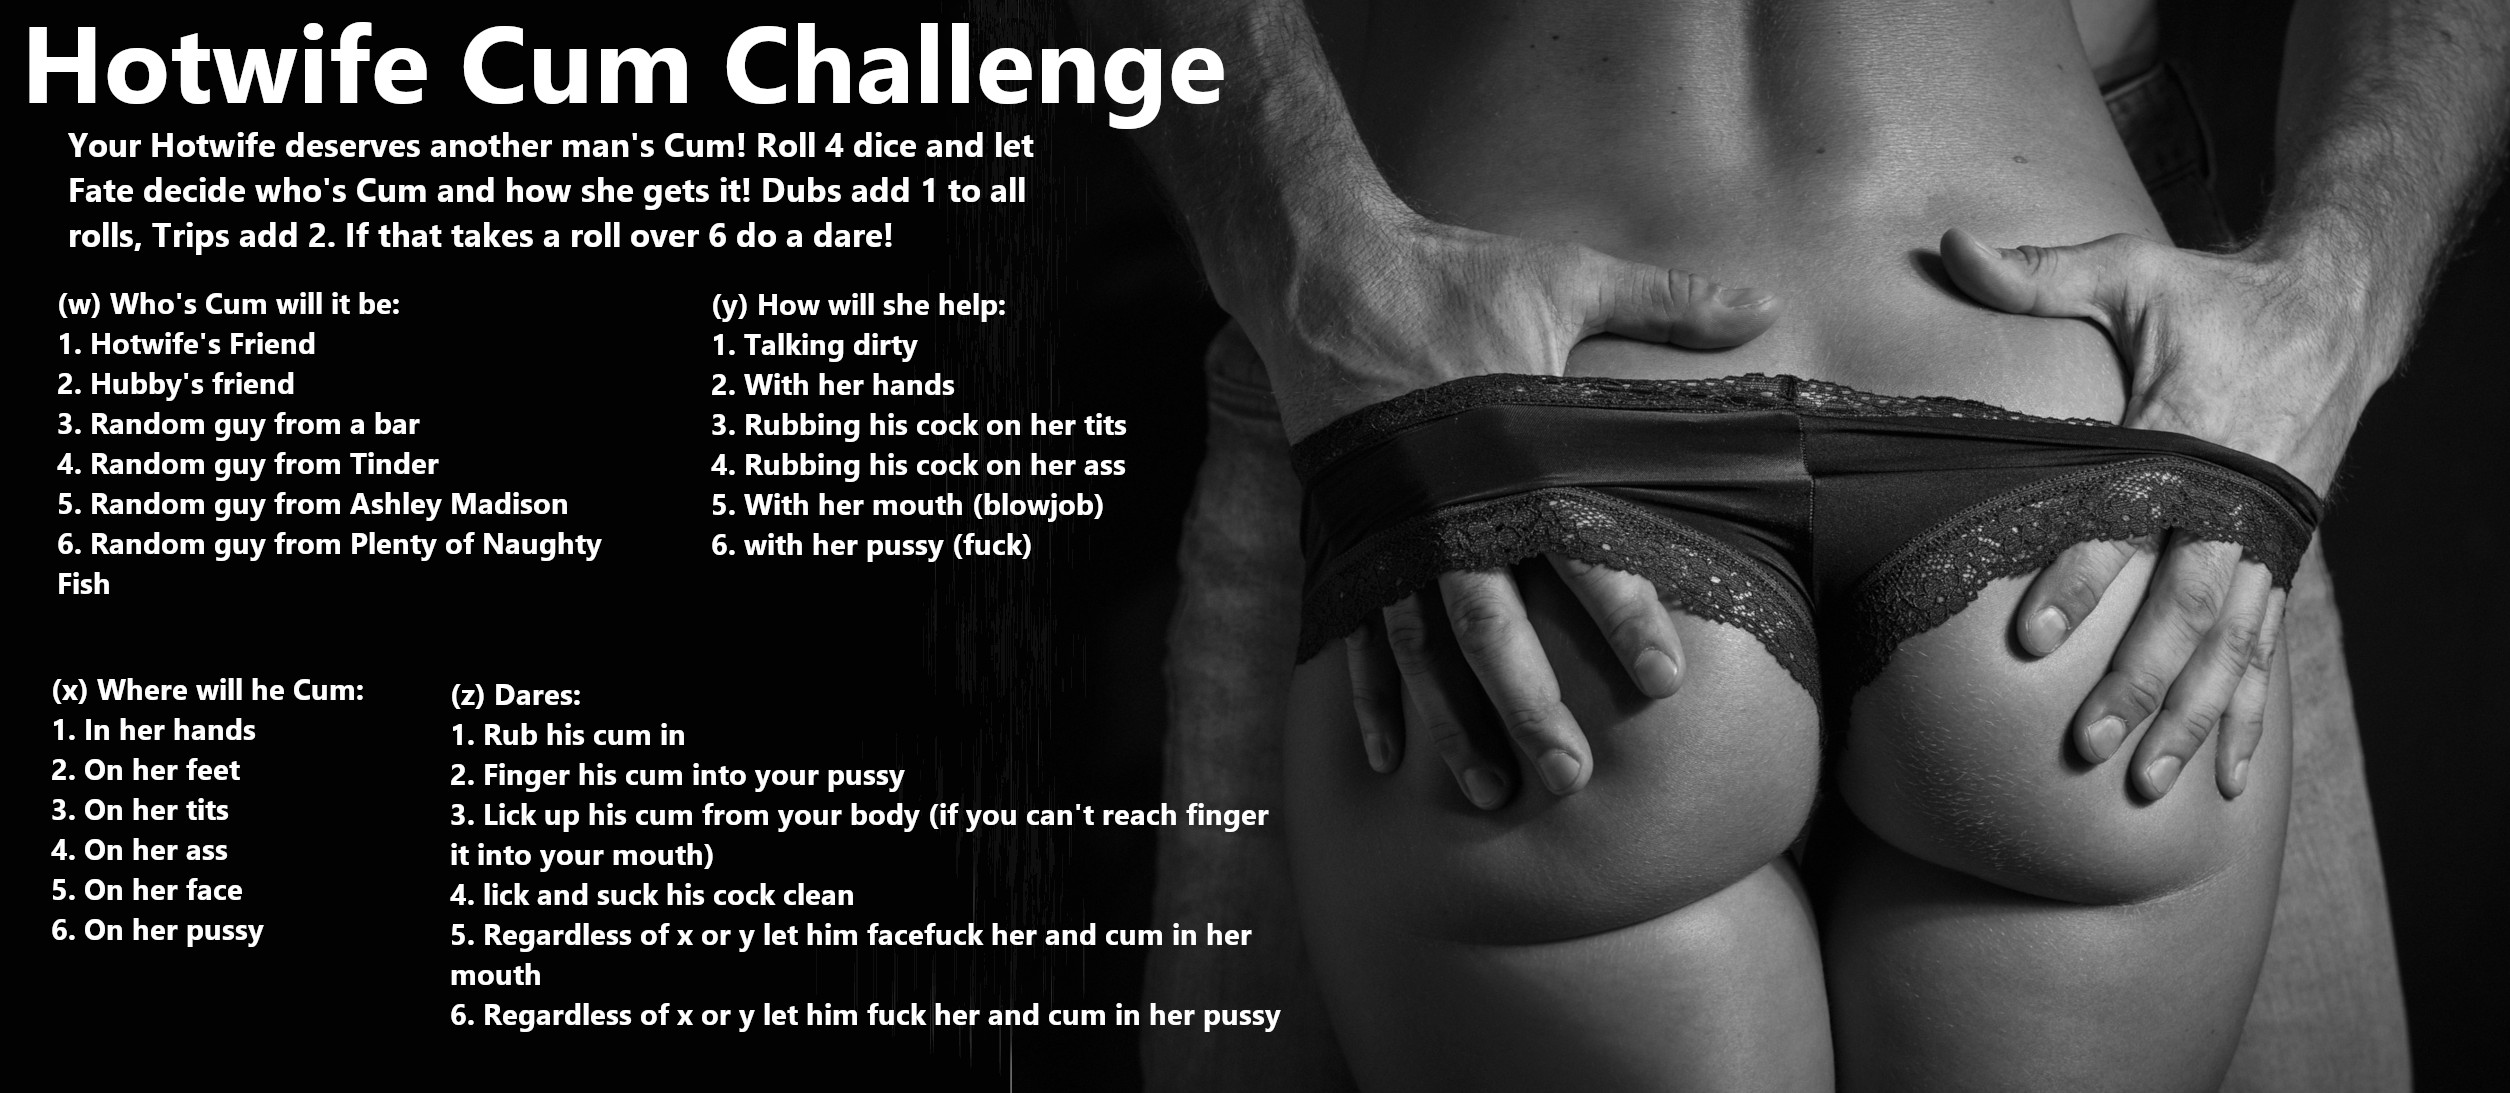 Hotwife Cum Challenge pic